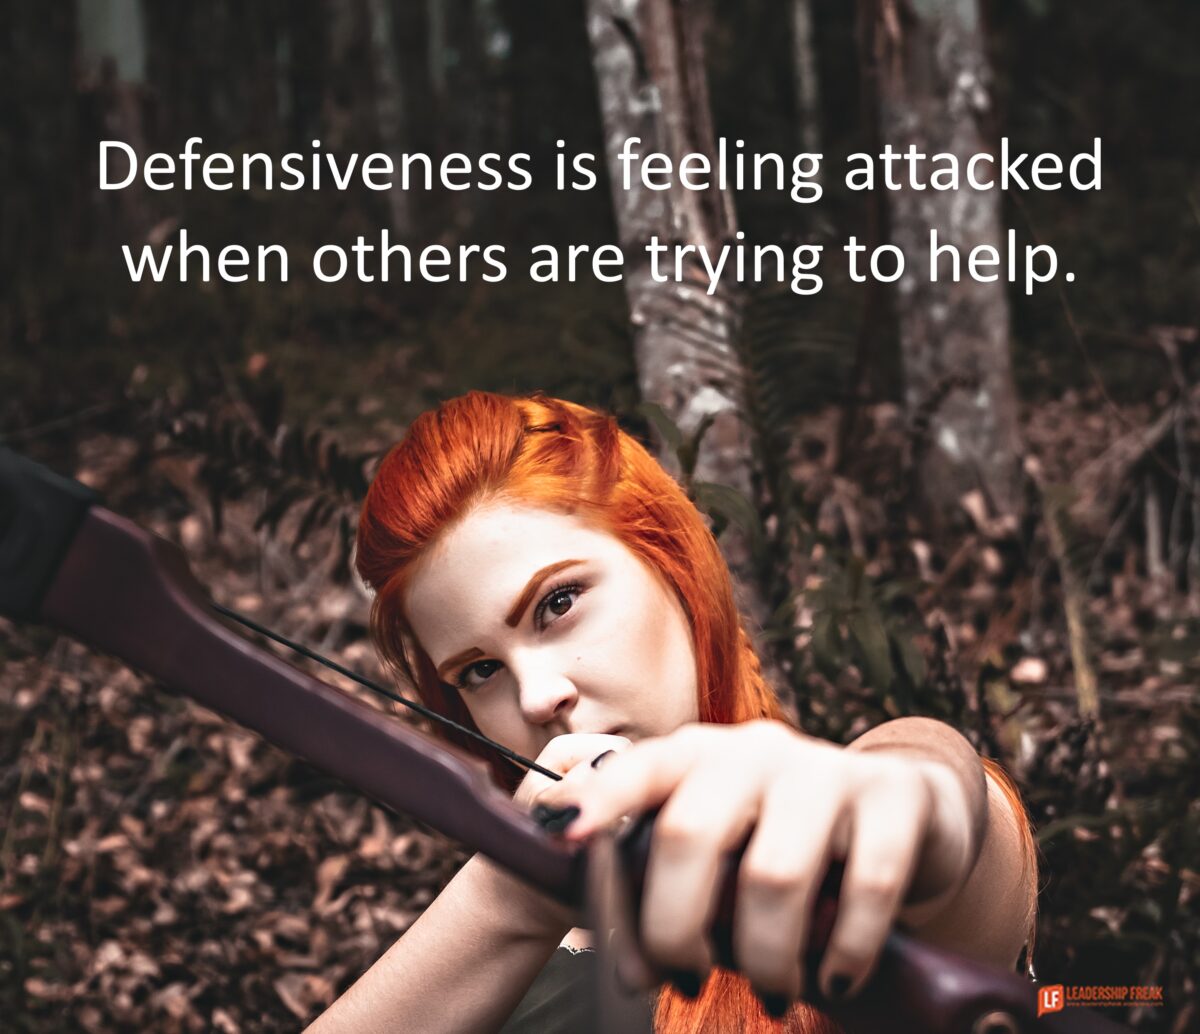 7 Responses that Defeat Defensiveness